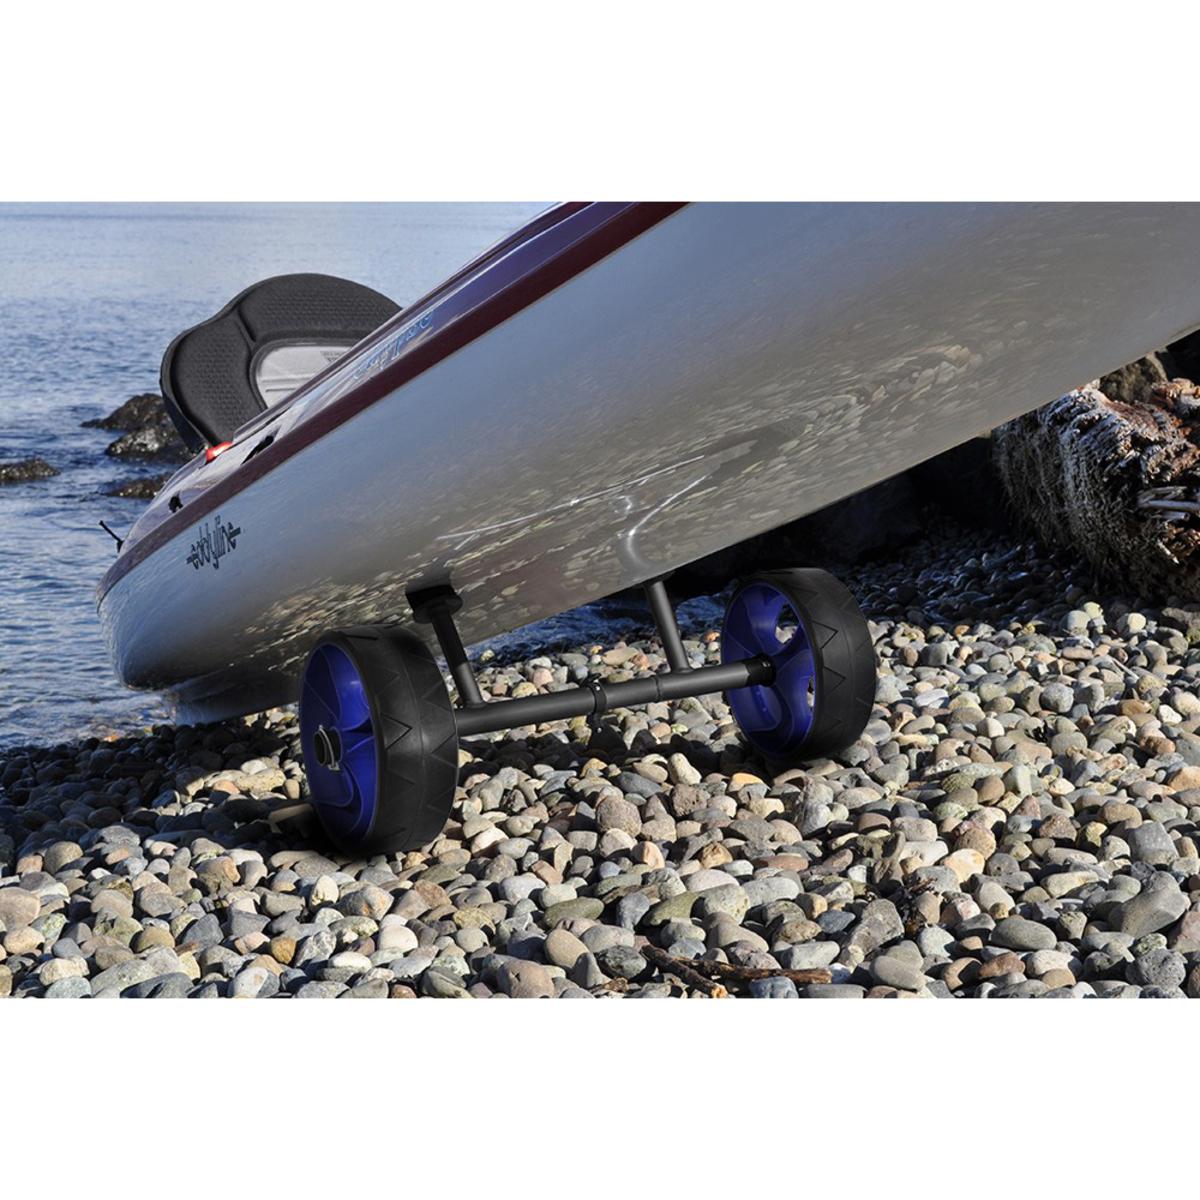 Seattle Sports Scupper Swift Sit-on-Top Kayak Cart